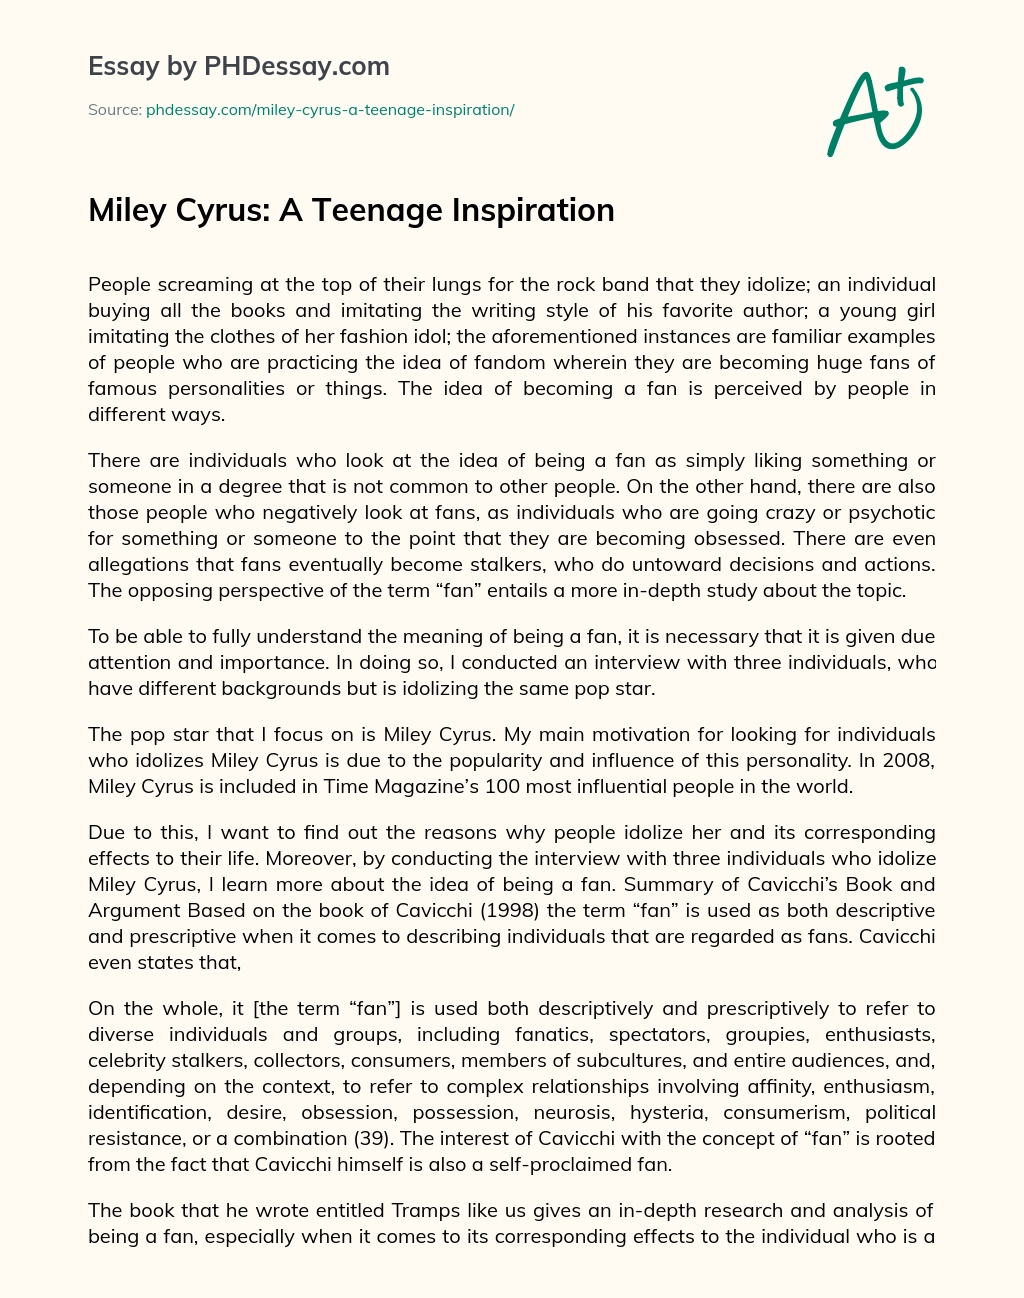 Miley Cyrus: A Teenage Inspiration essay